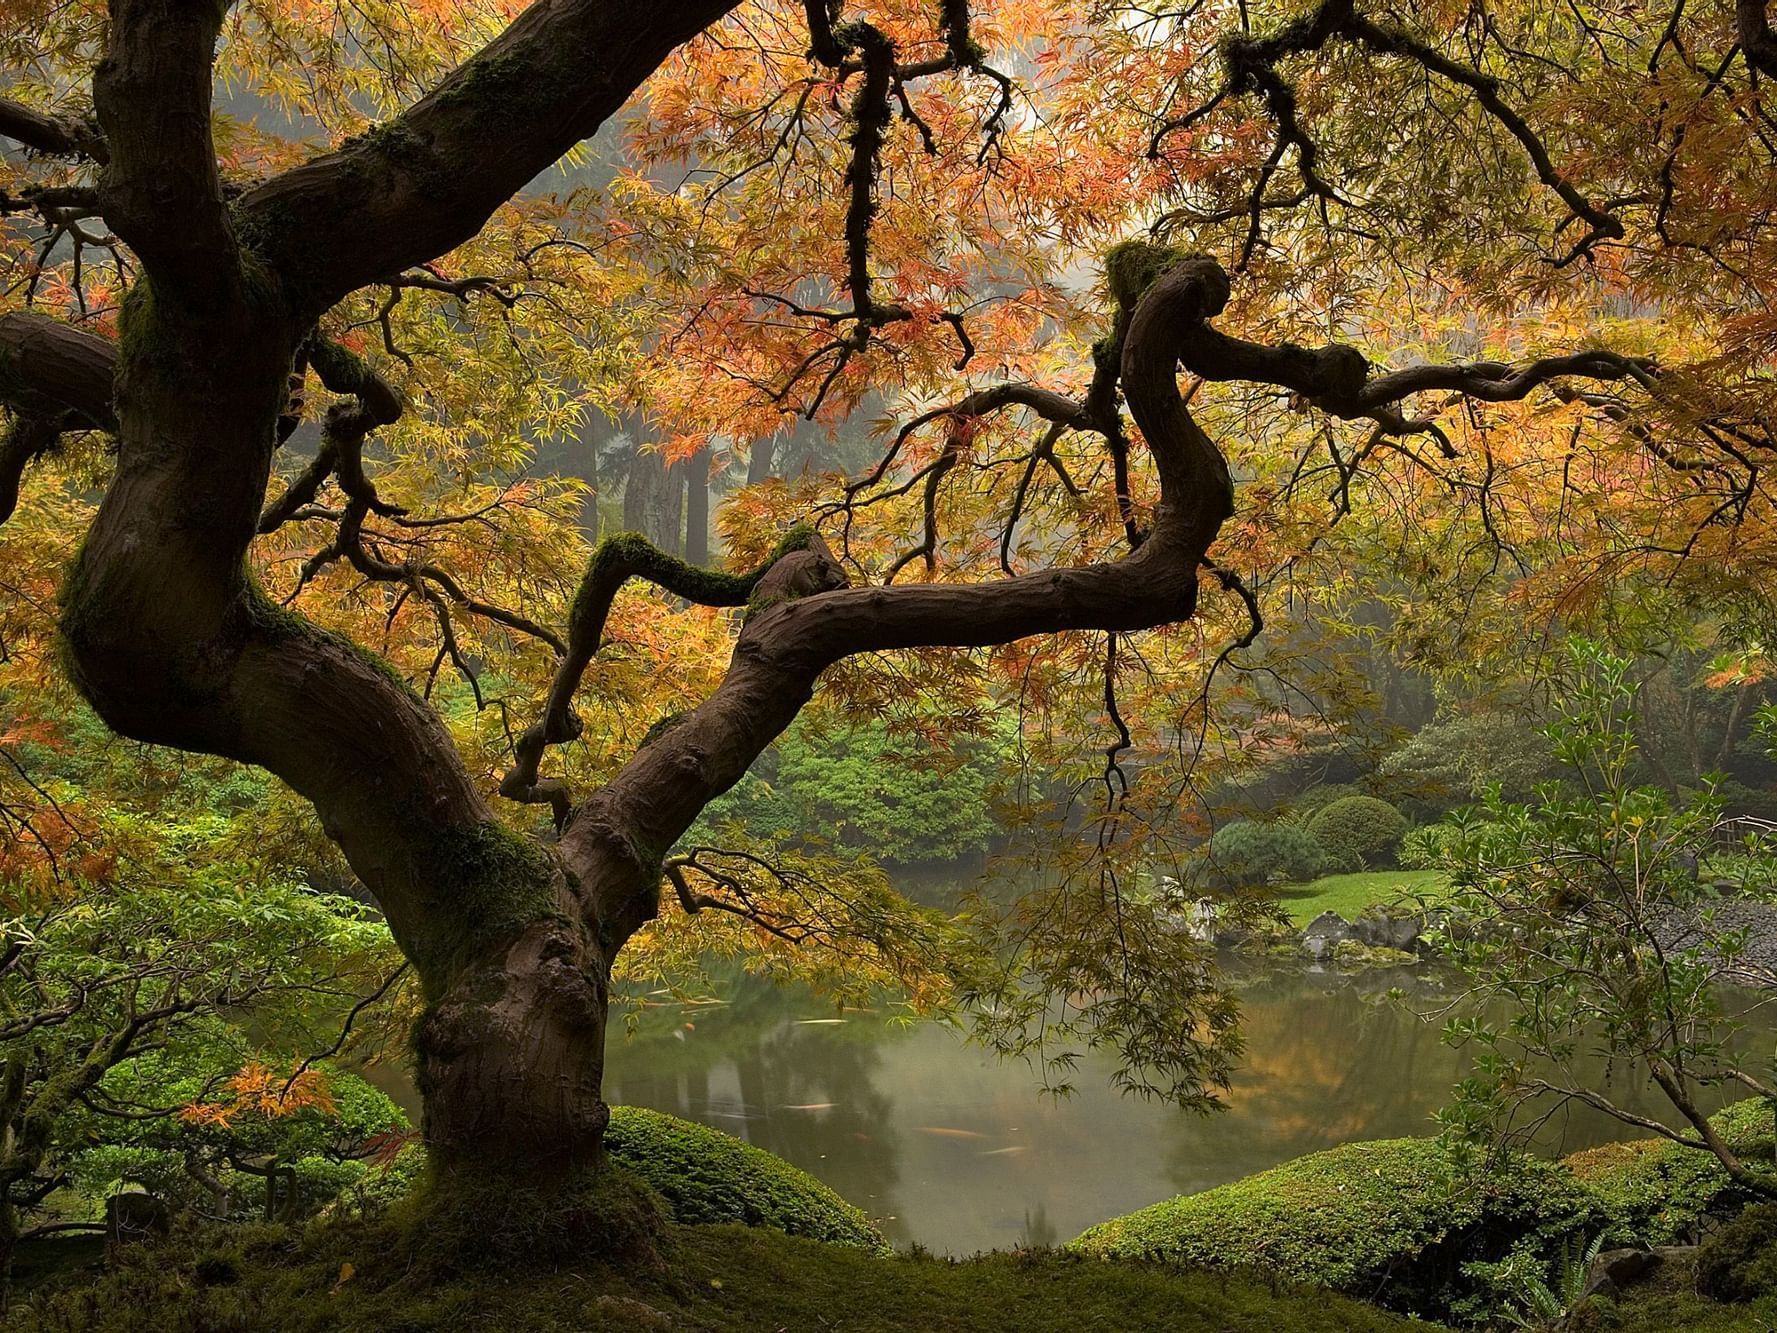 A Japanese Maple tree near a pond